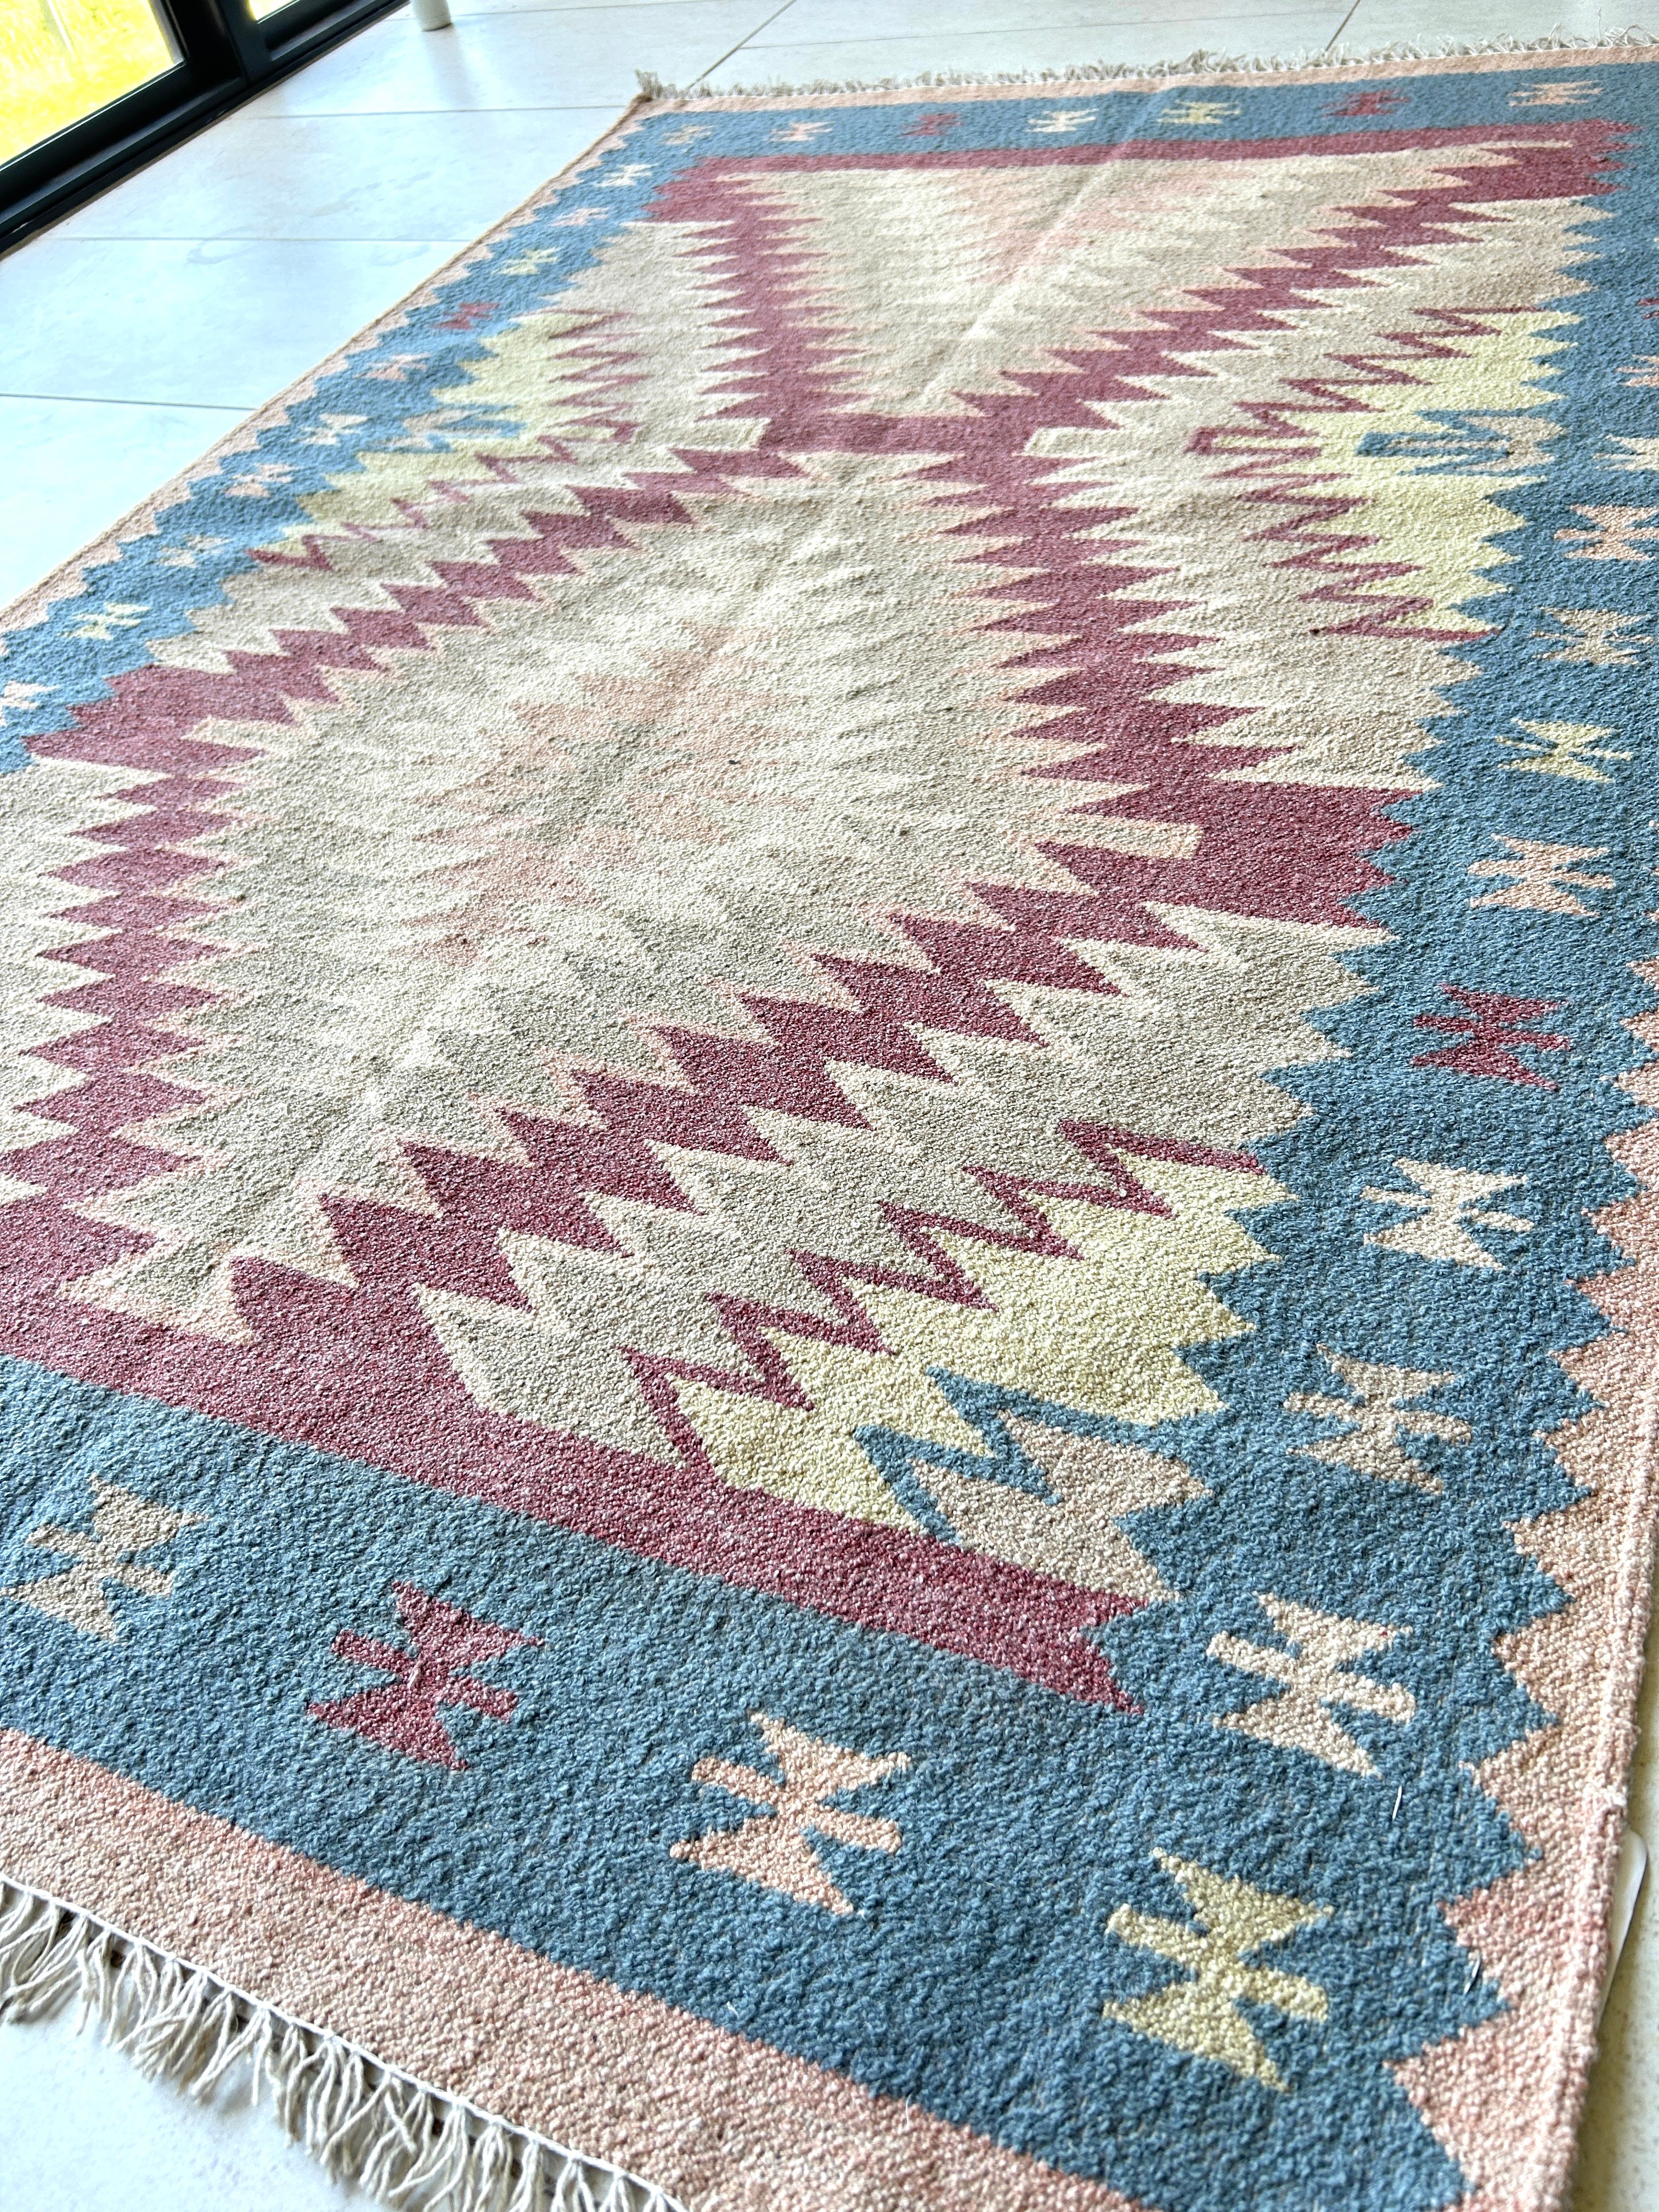 Handknotted Boho Afghan Kilim rug w/ blue and dusty rose tones (151cm x 102cm)